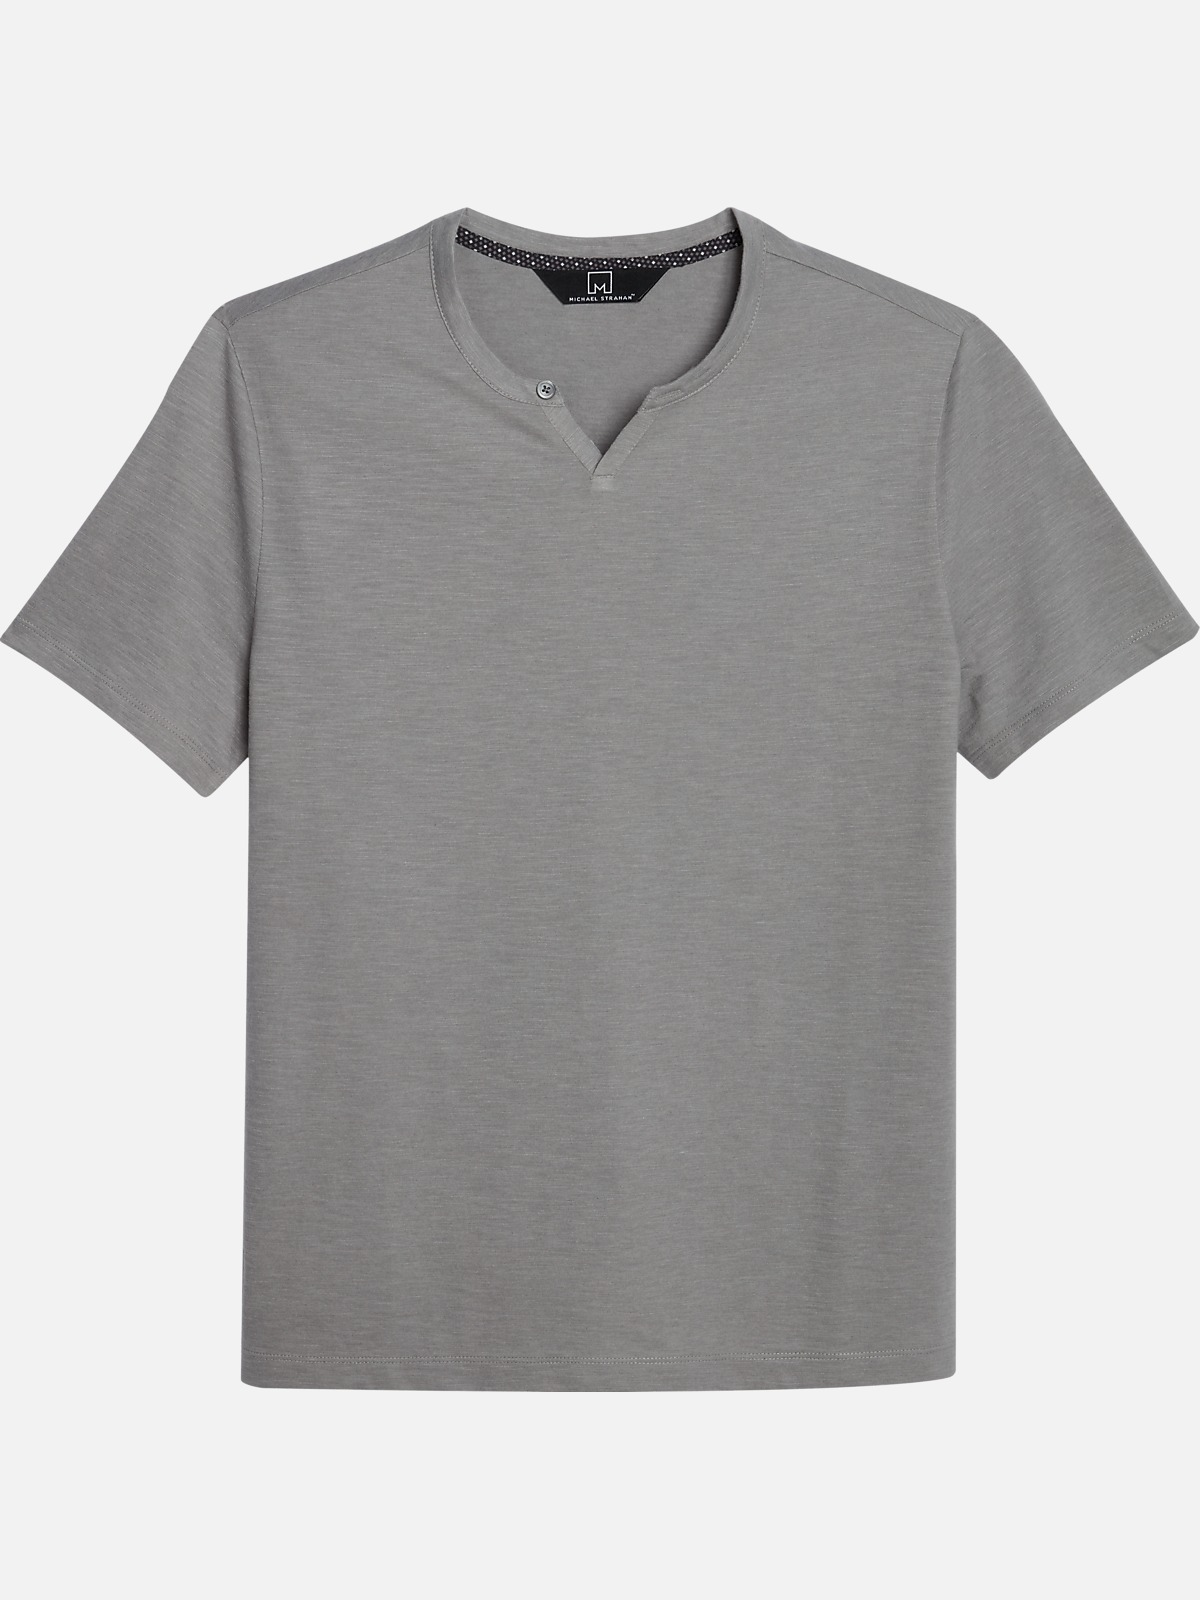 Michael Strahan Modern Fit Split V Neck T Shirt All Clearance 3999 Mens Wearhouse 